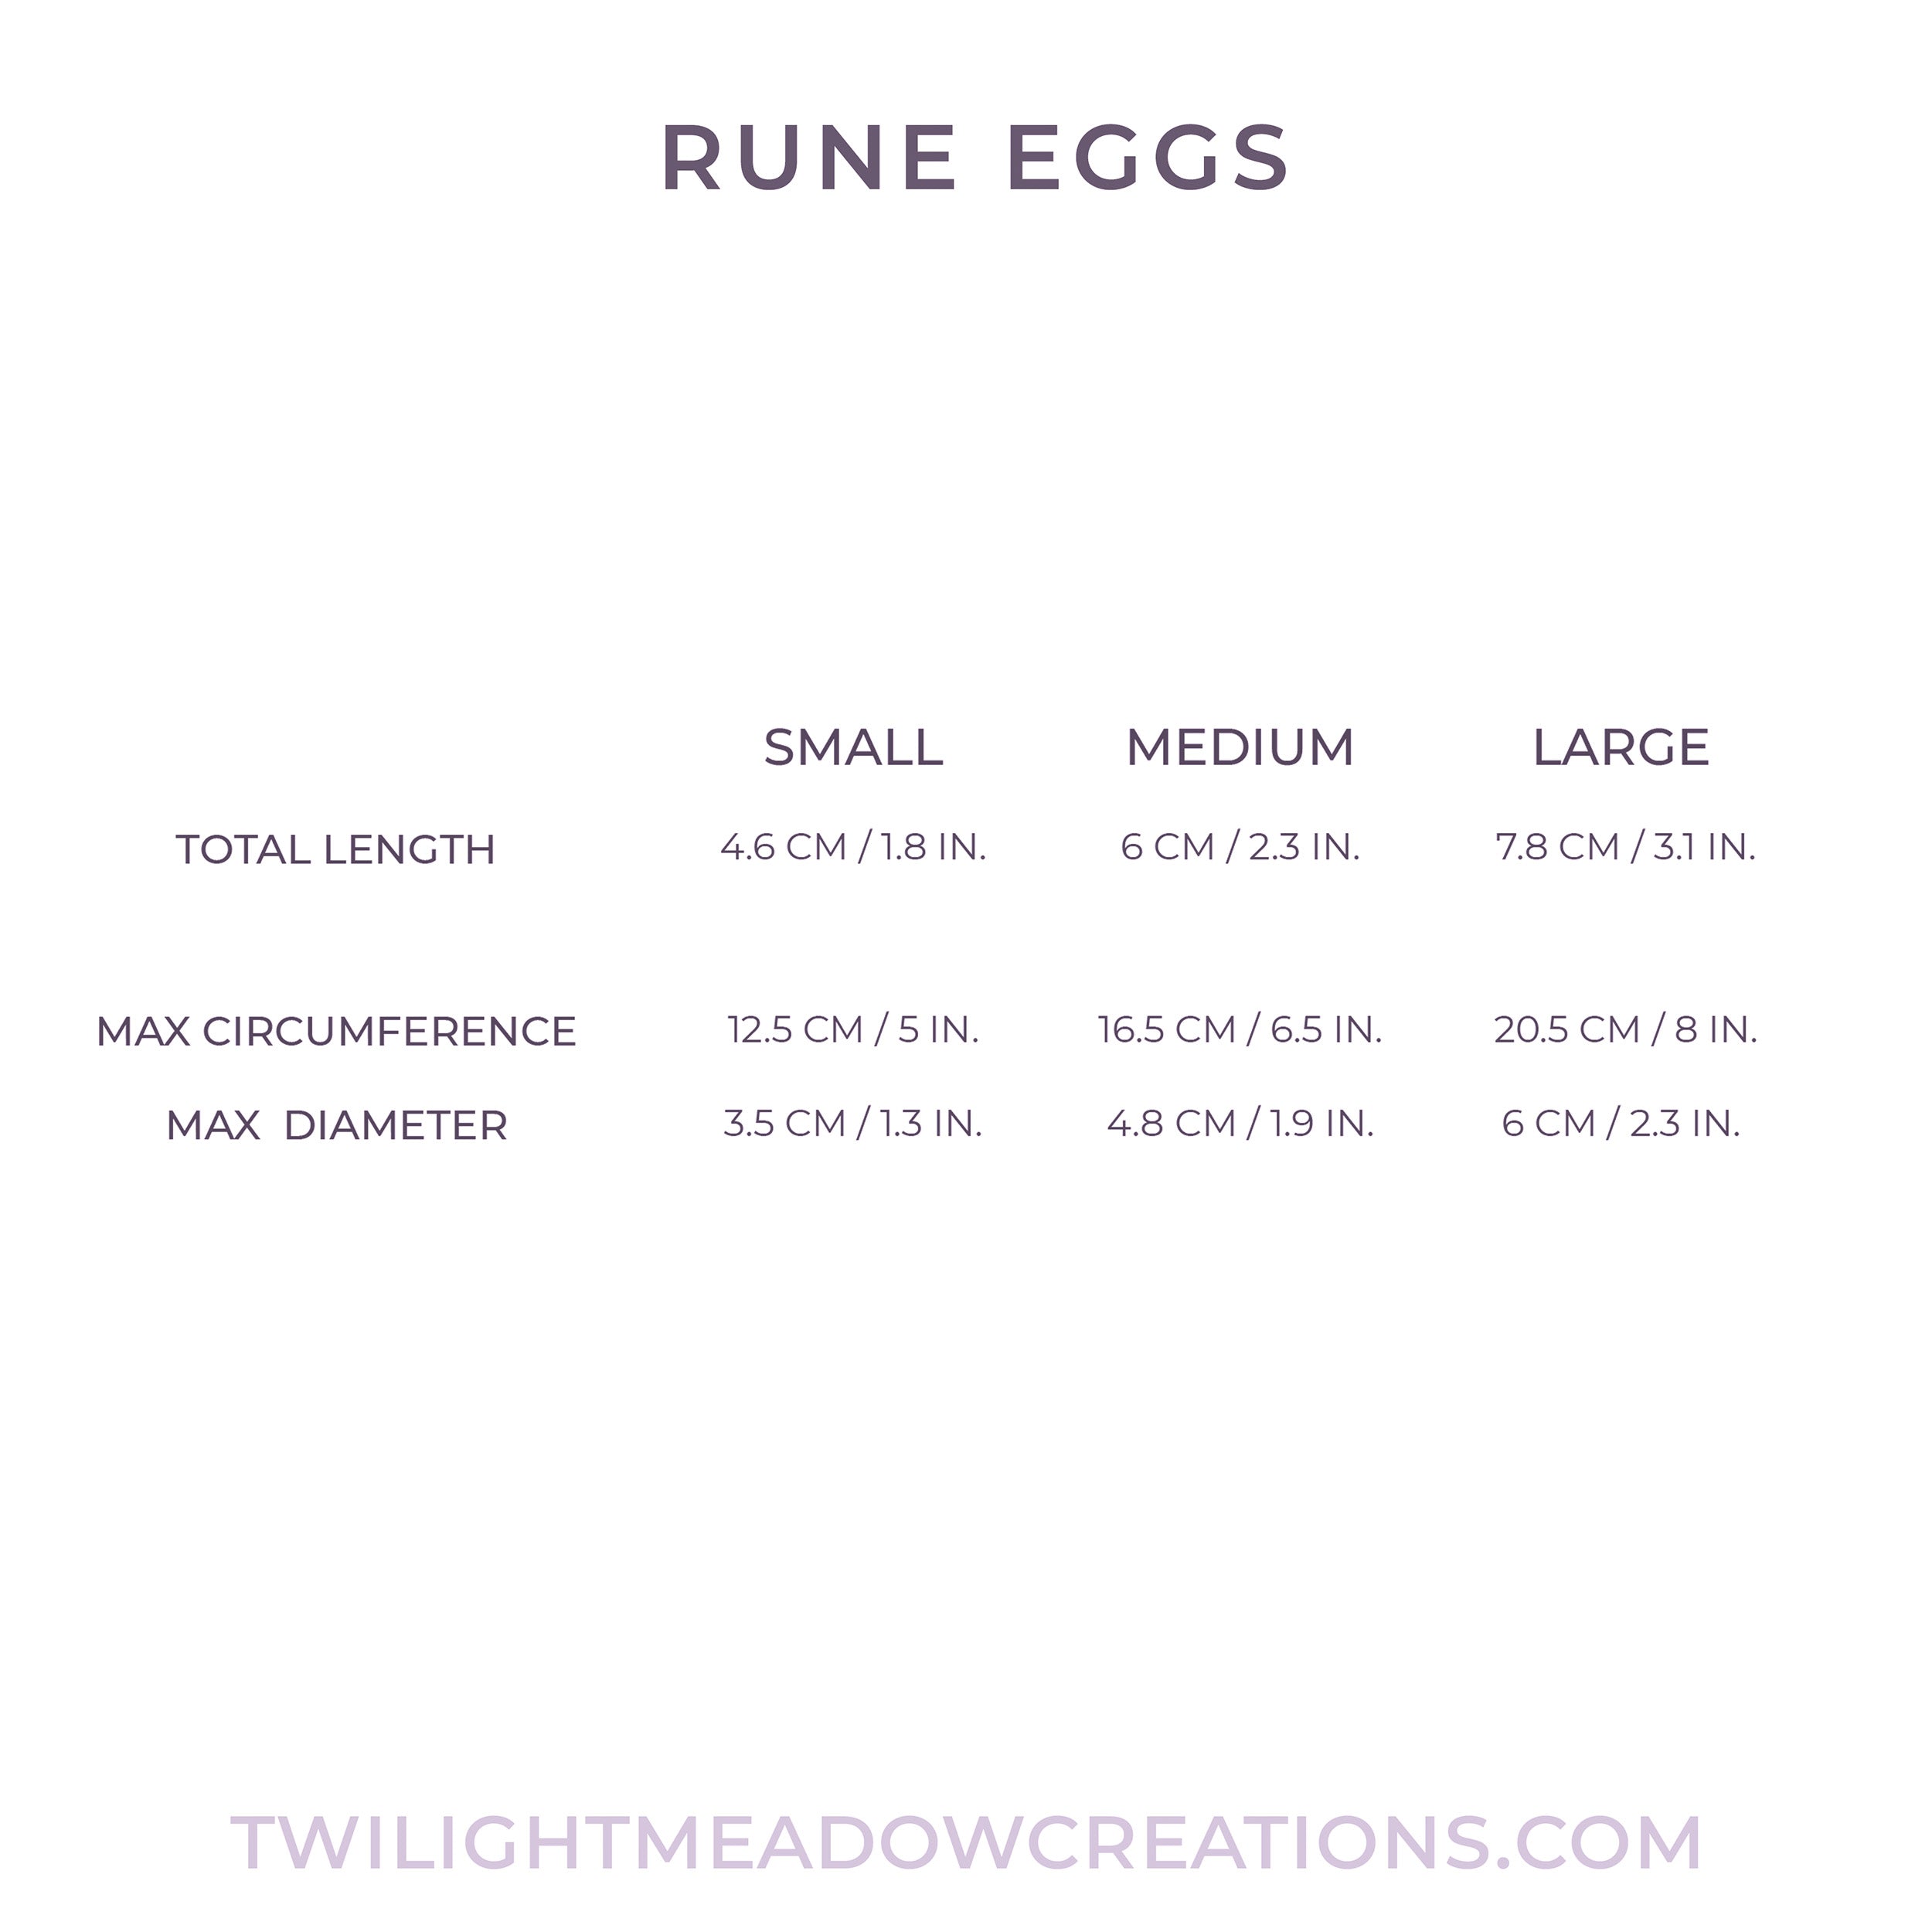 Wildwood Alchemy Custom Rune Egg Set